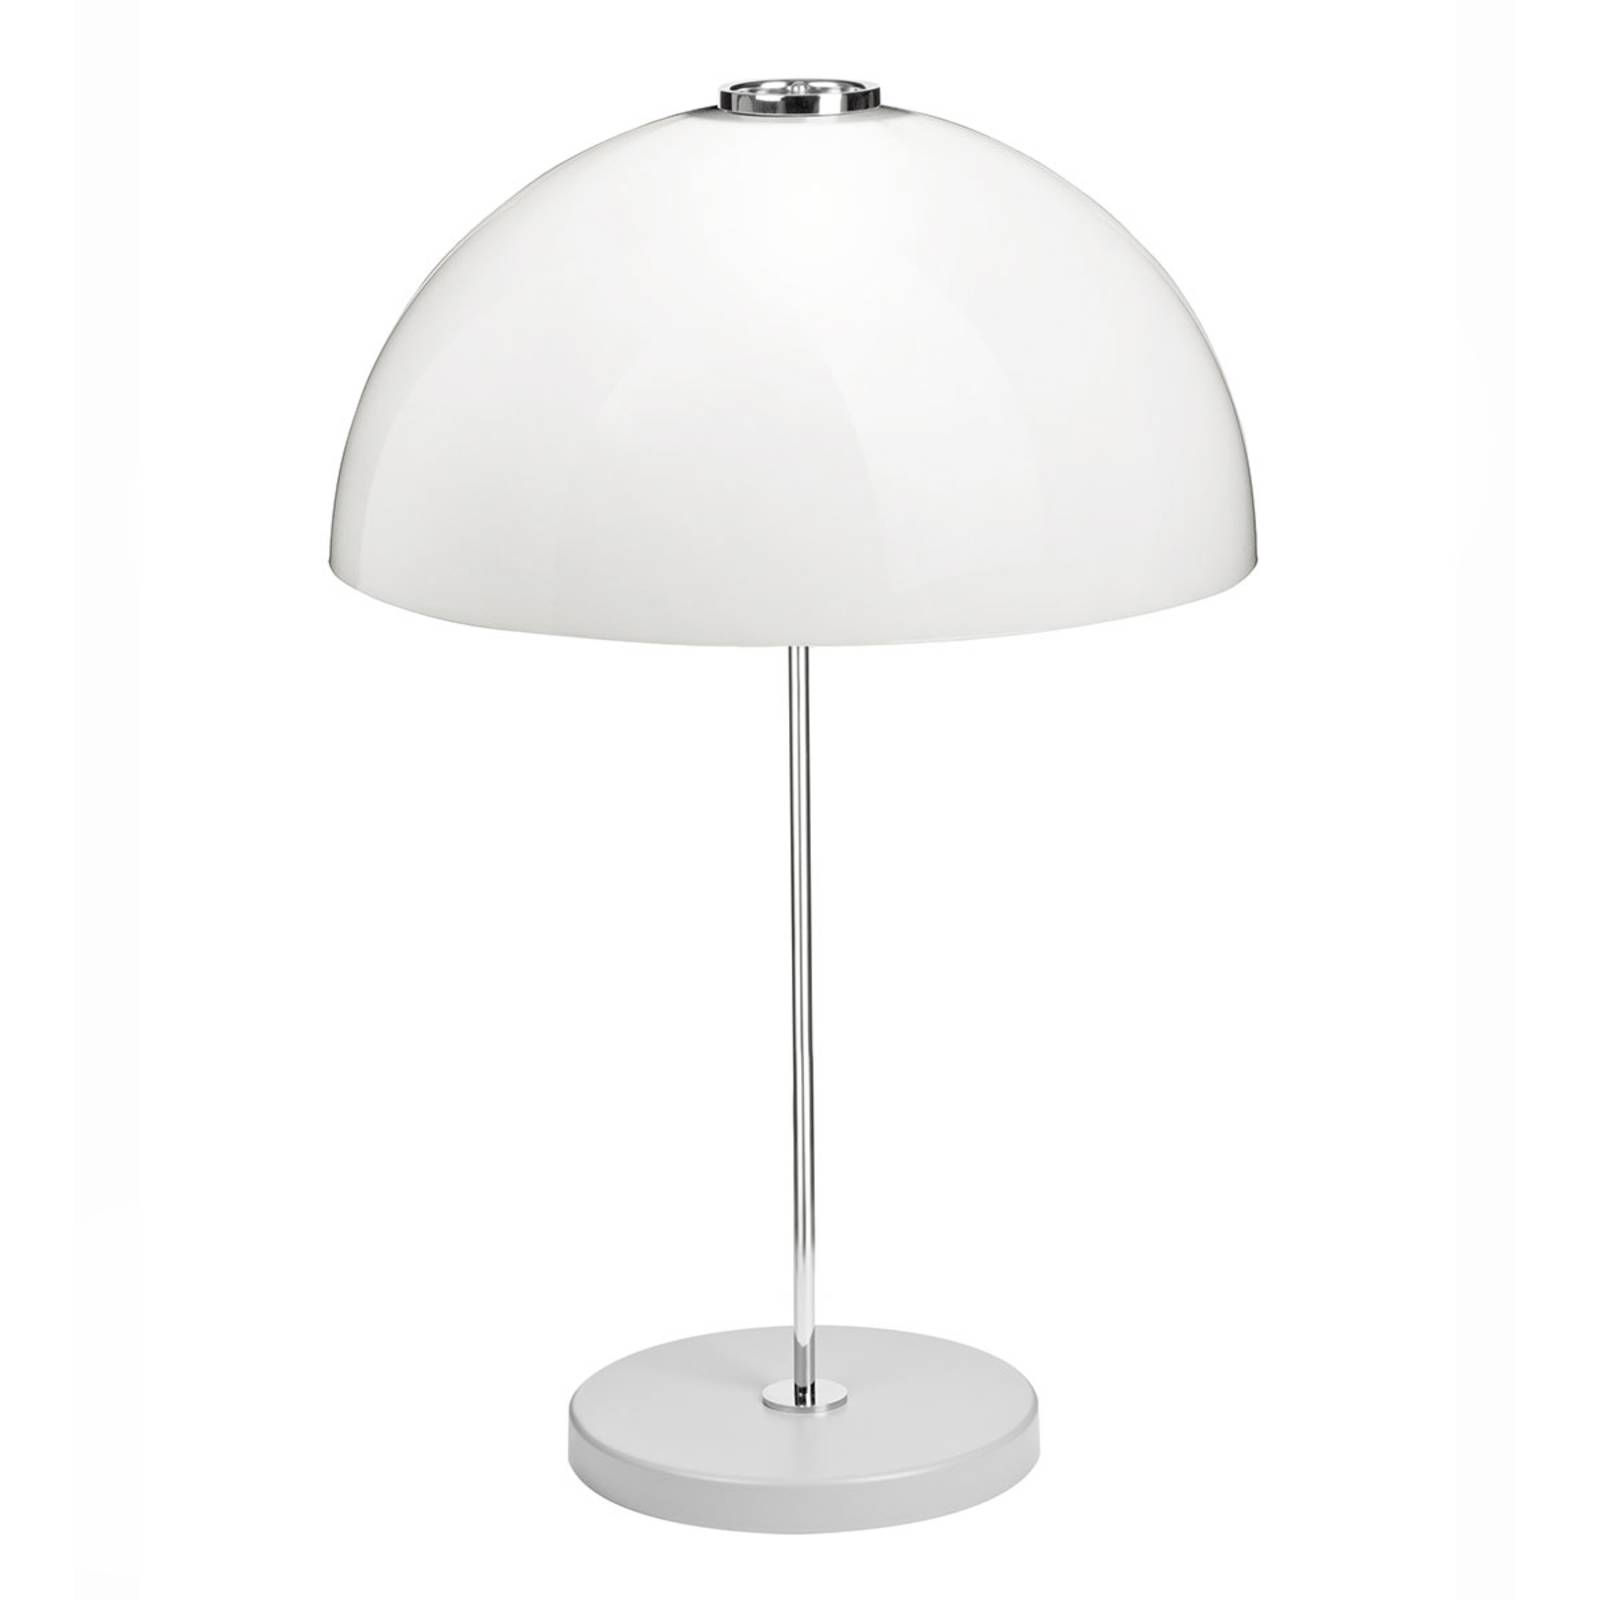 Image of Innolux Kupoli lampe à poser pied gris 6420611986397